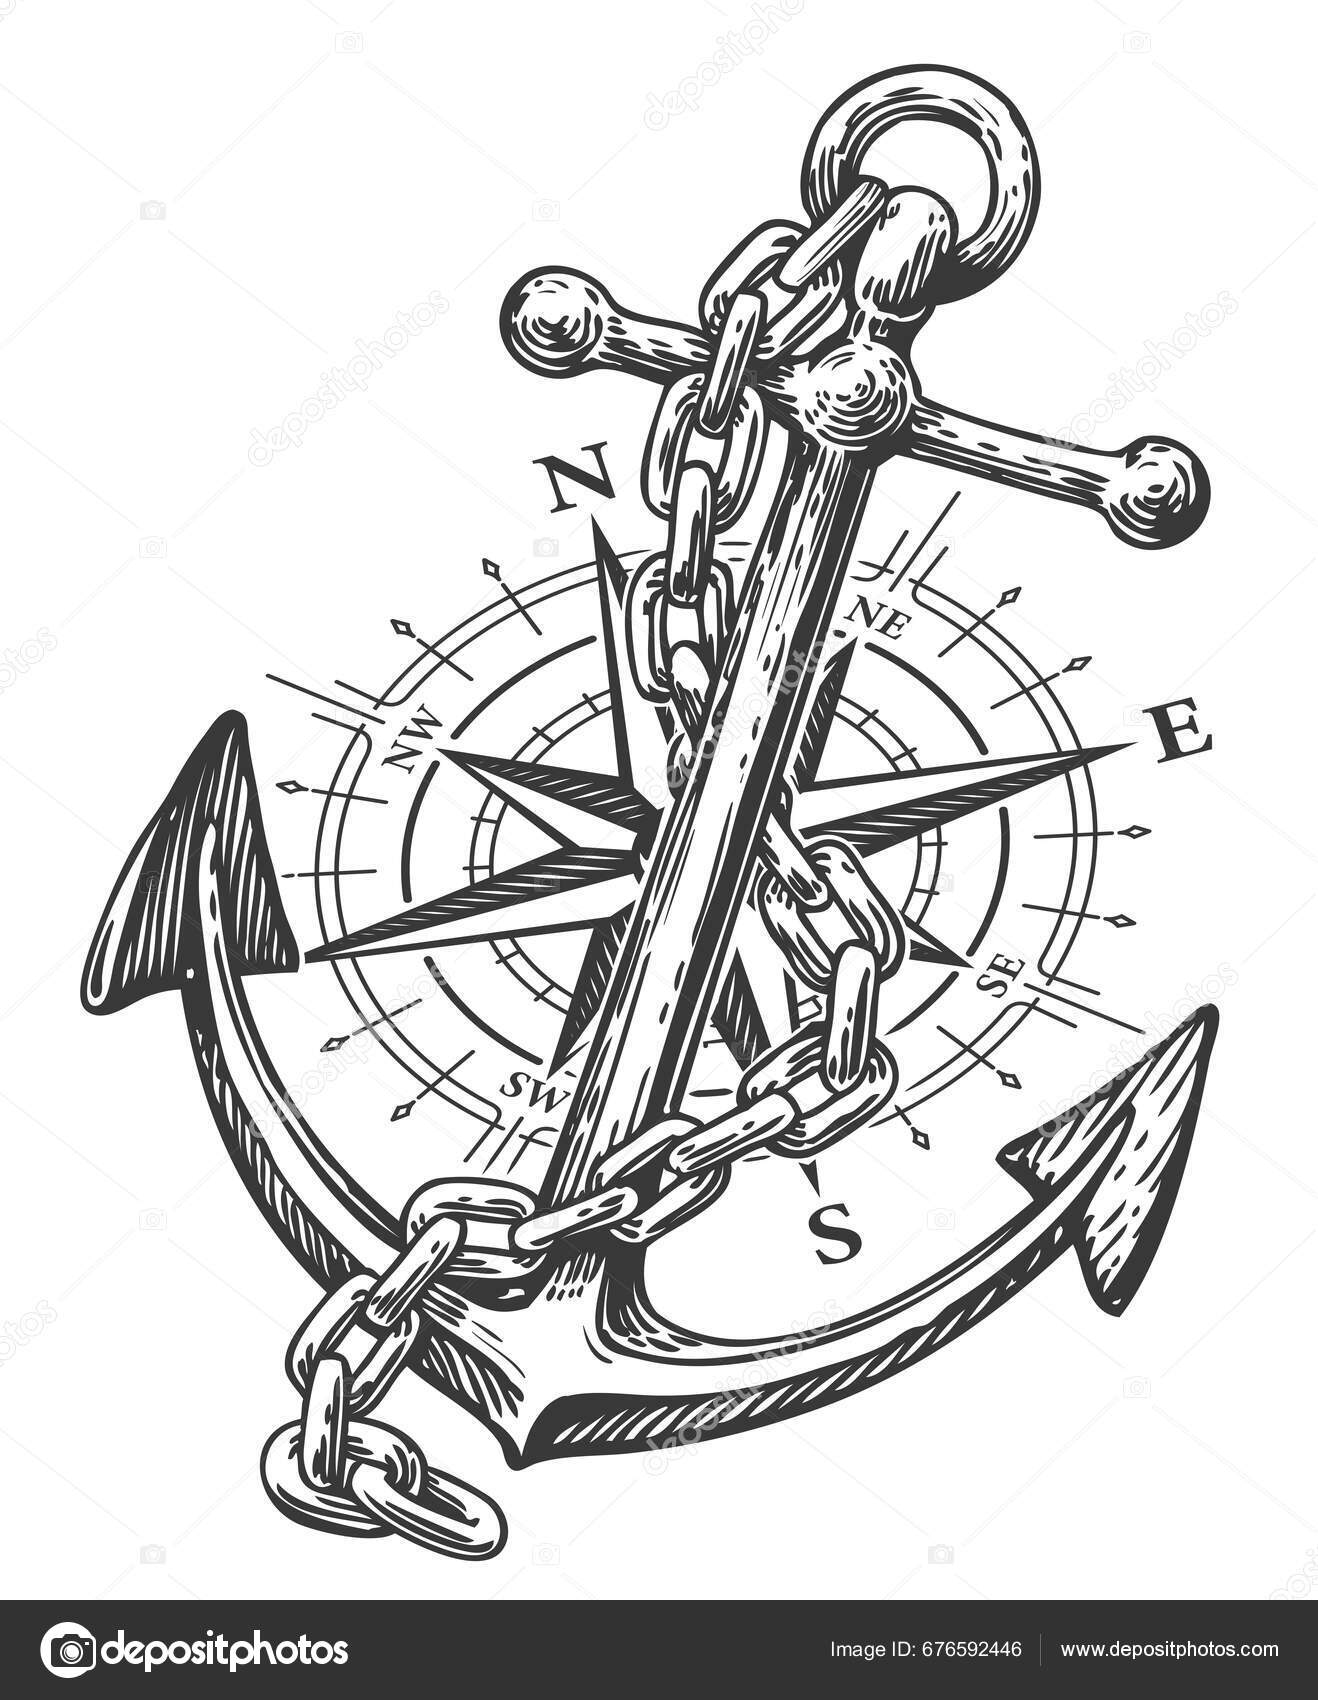 https://st5.depositphotos.com/1496387/67659/v/1600/depositphotos_676592446-stock-illustration-compass-rose-wind-anchor-rope.jpg